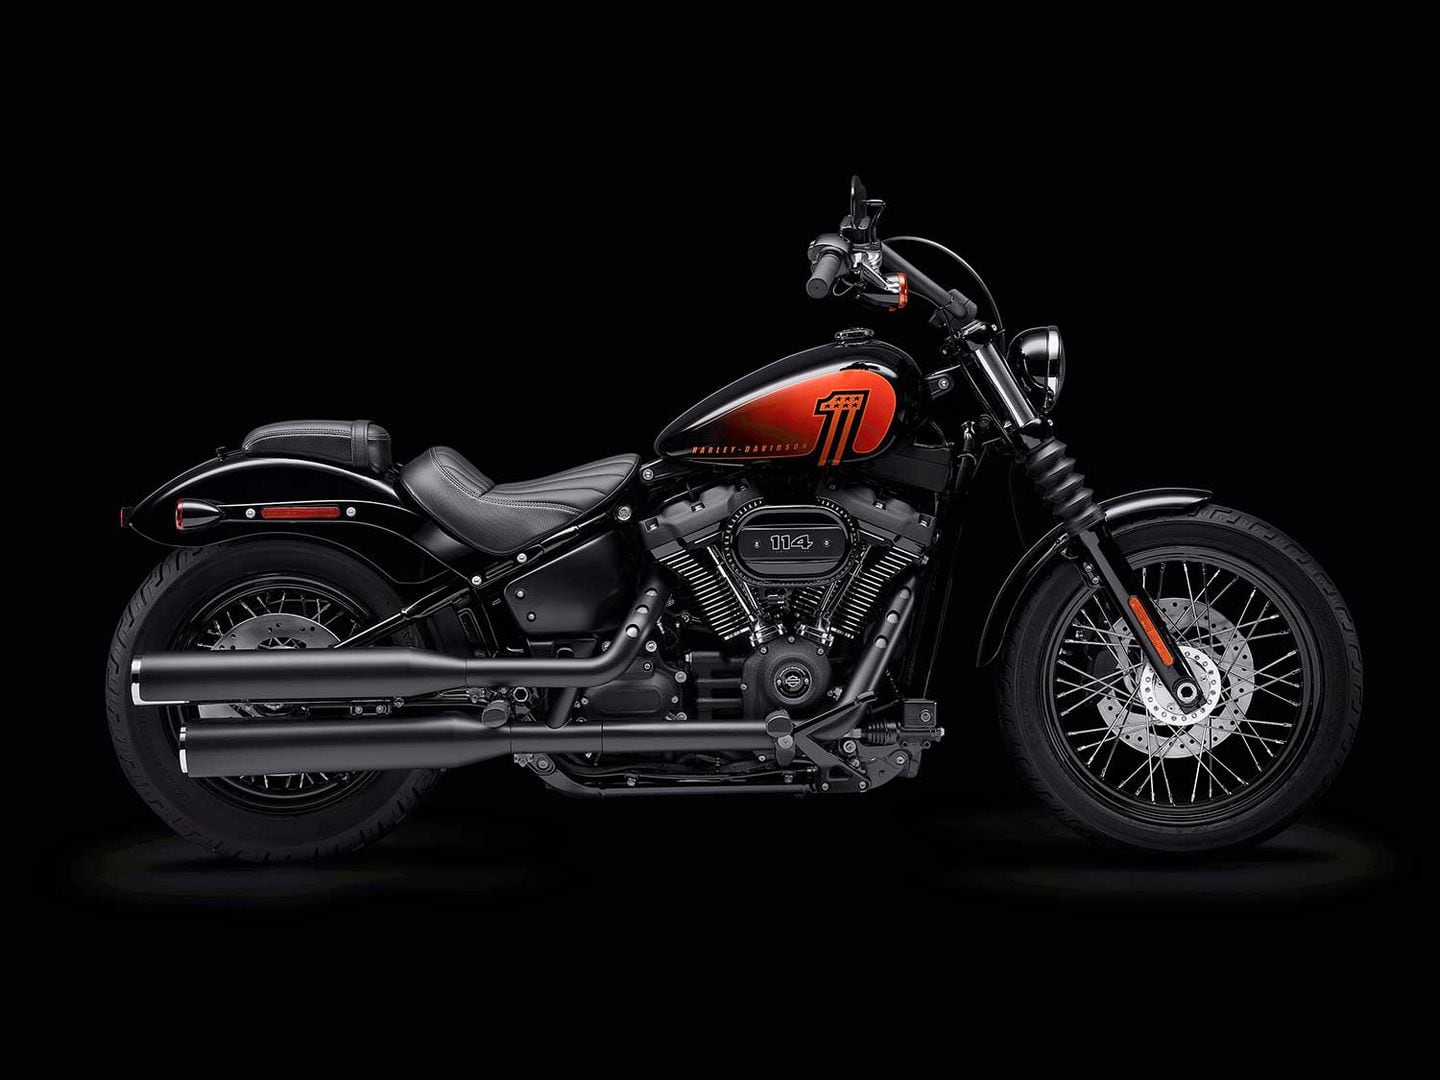 Harley Models That Got Trimmed For 21 Motorcycle Cruiser